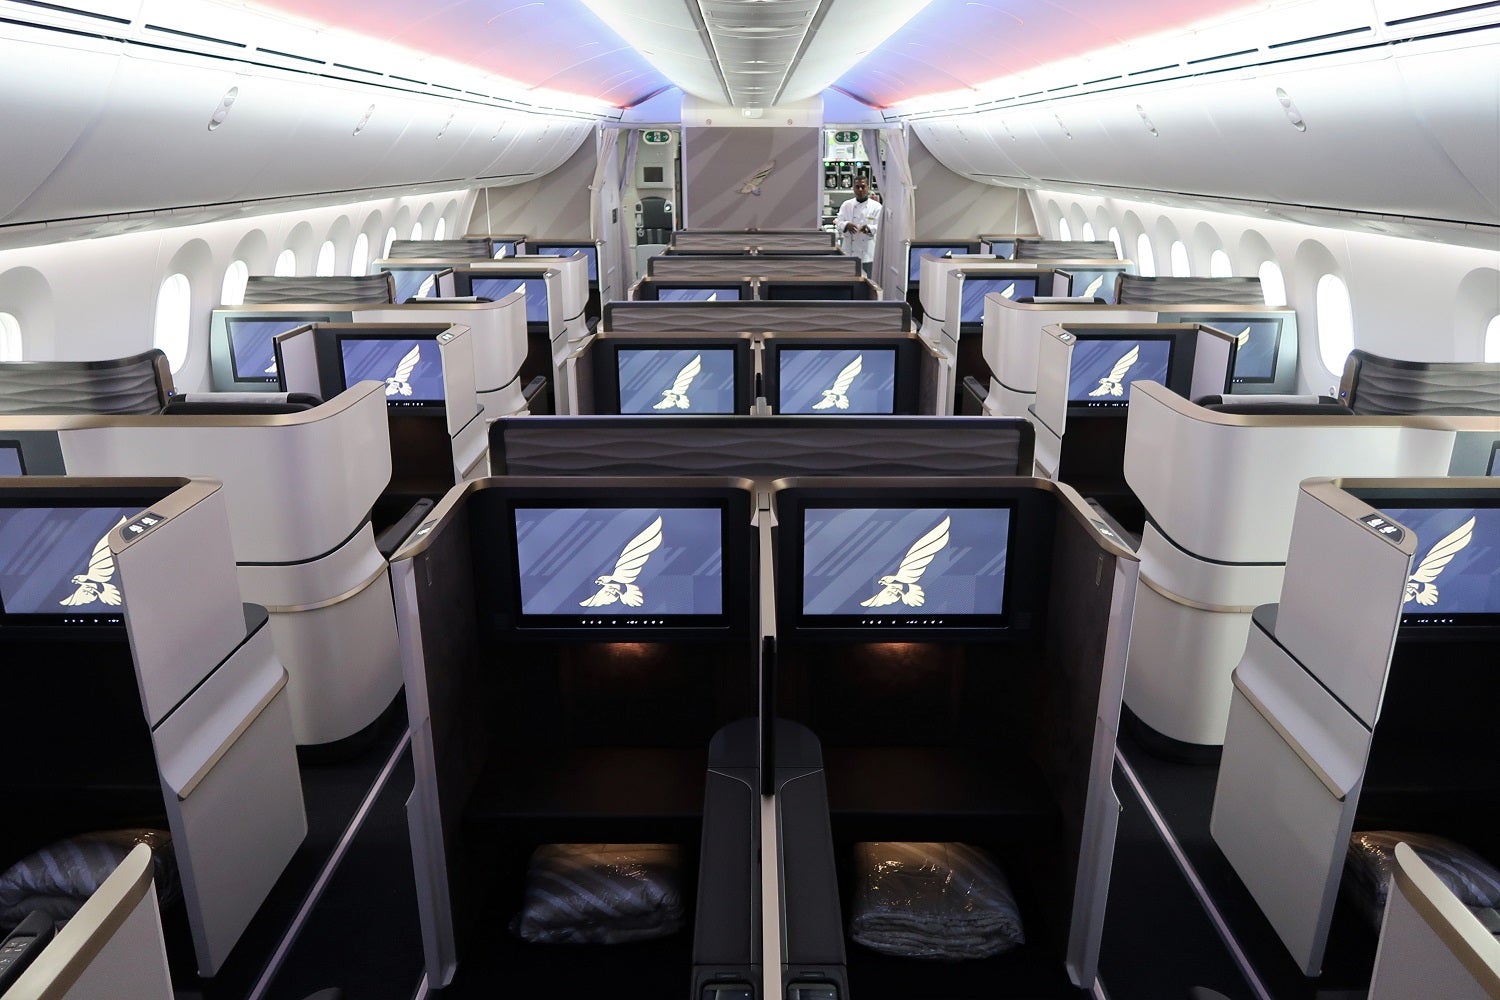 Gulf Air 787-9 LHR-BAH business class cabin